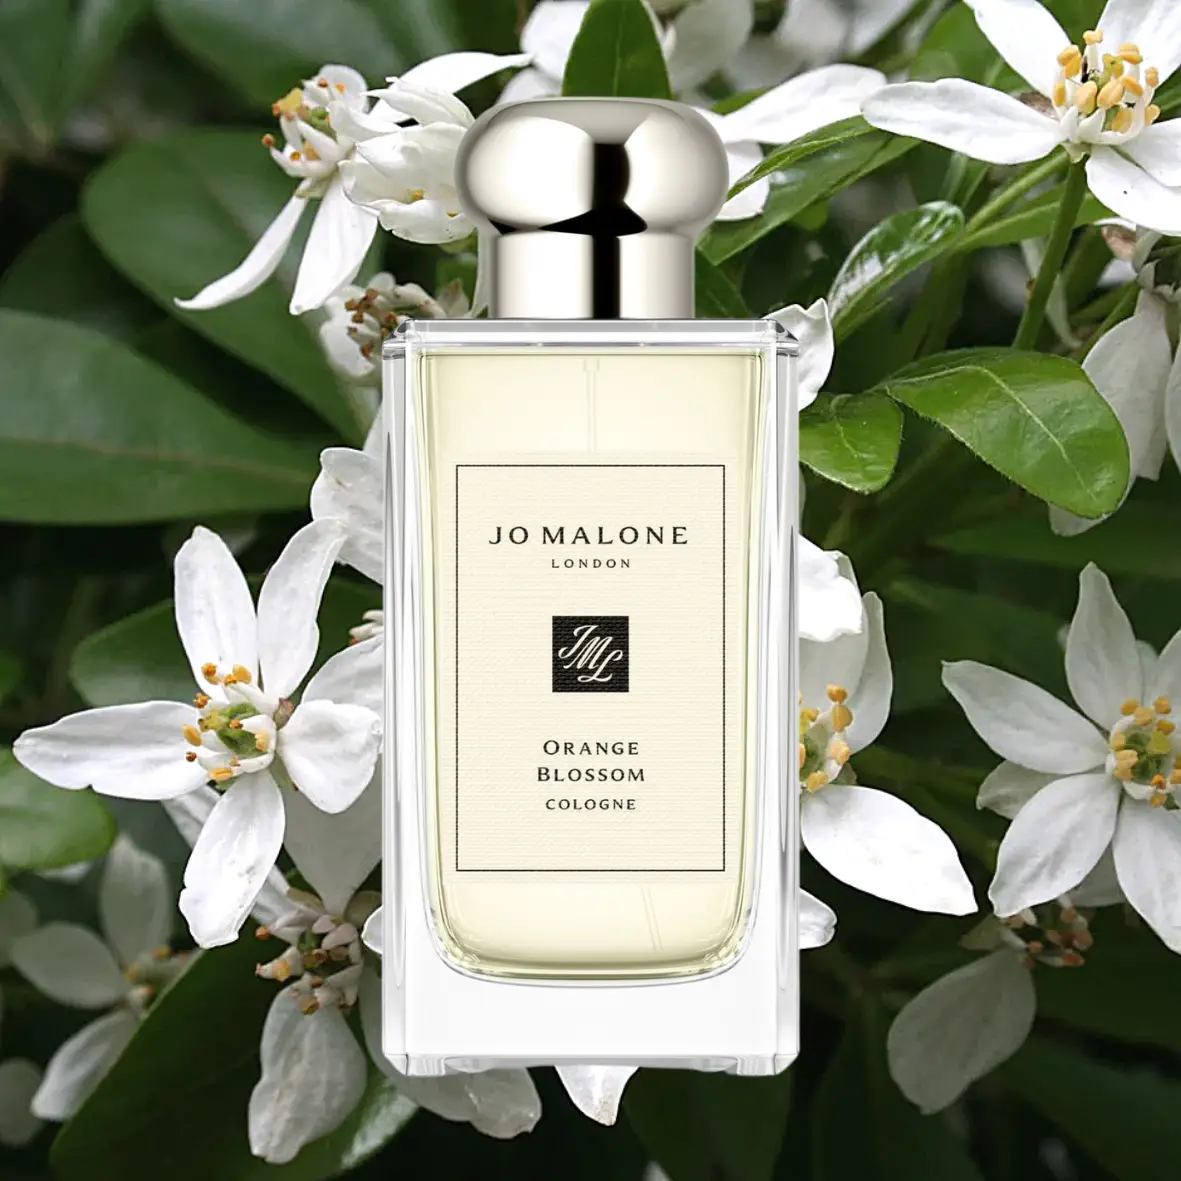 Jo Malone London Orange Blossom
Kate Middleton Perfume
Catherine, The Princess of Wales Fragrance
 